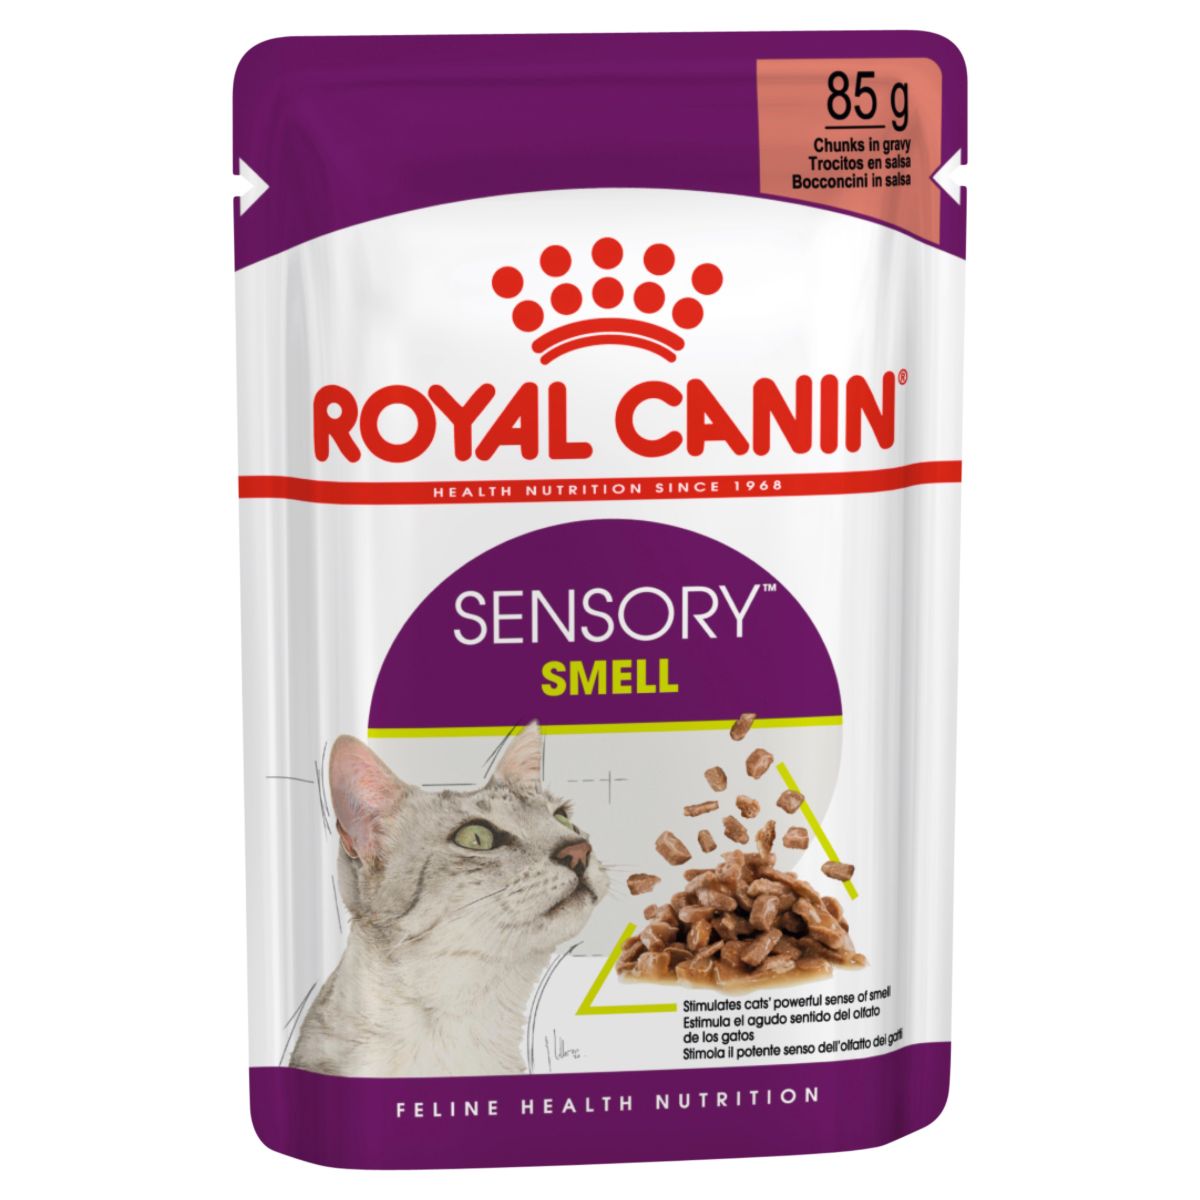 Royal Canin Sensory Smell Chunks in Gravy Wet Cat Food 85G